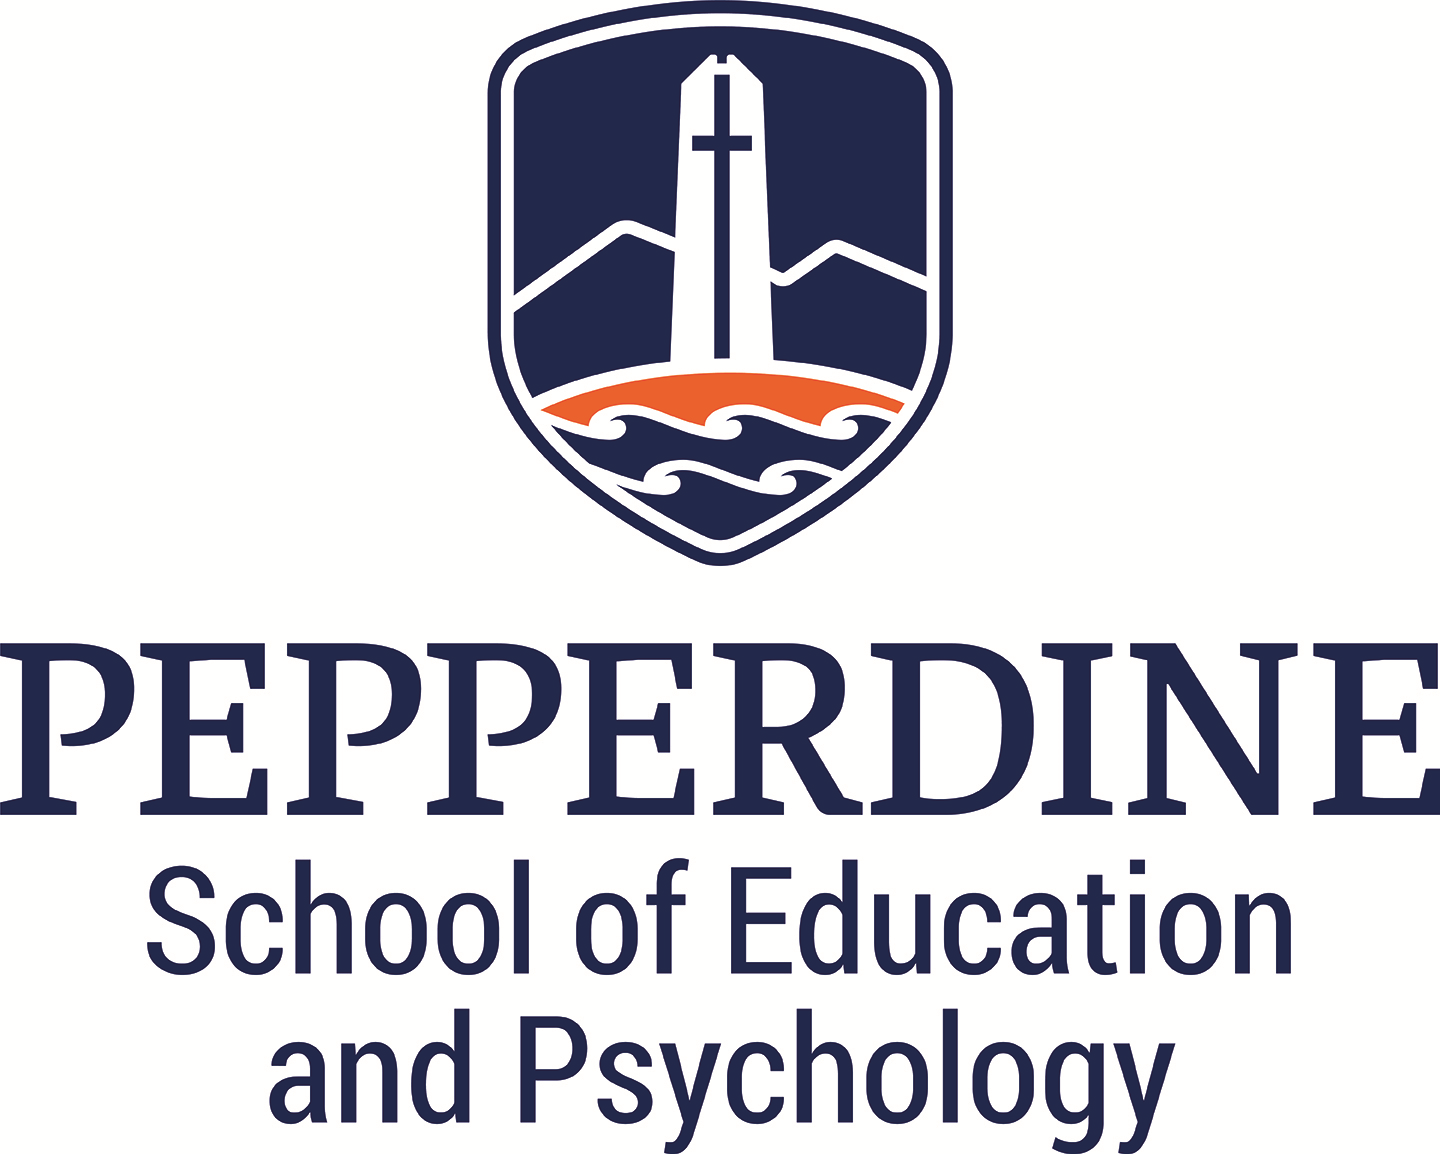 Master's in Clinical Psychology Program at Pepperdine University